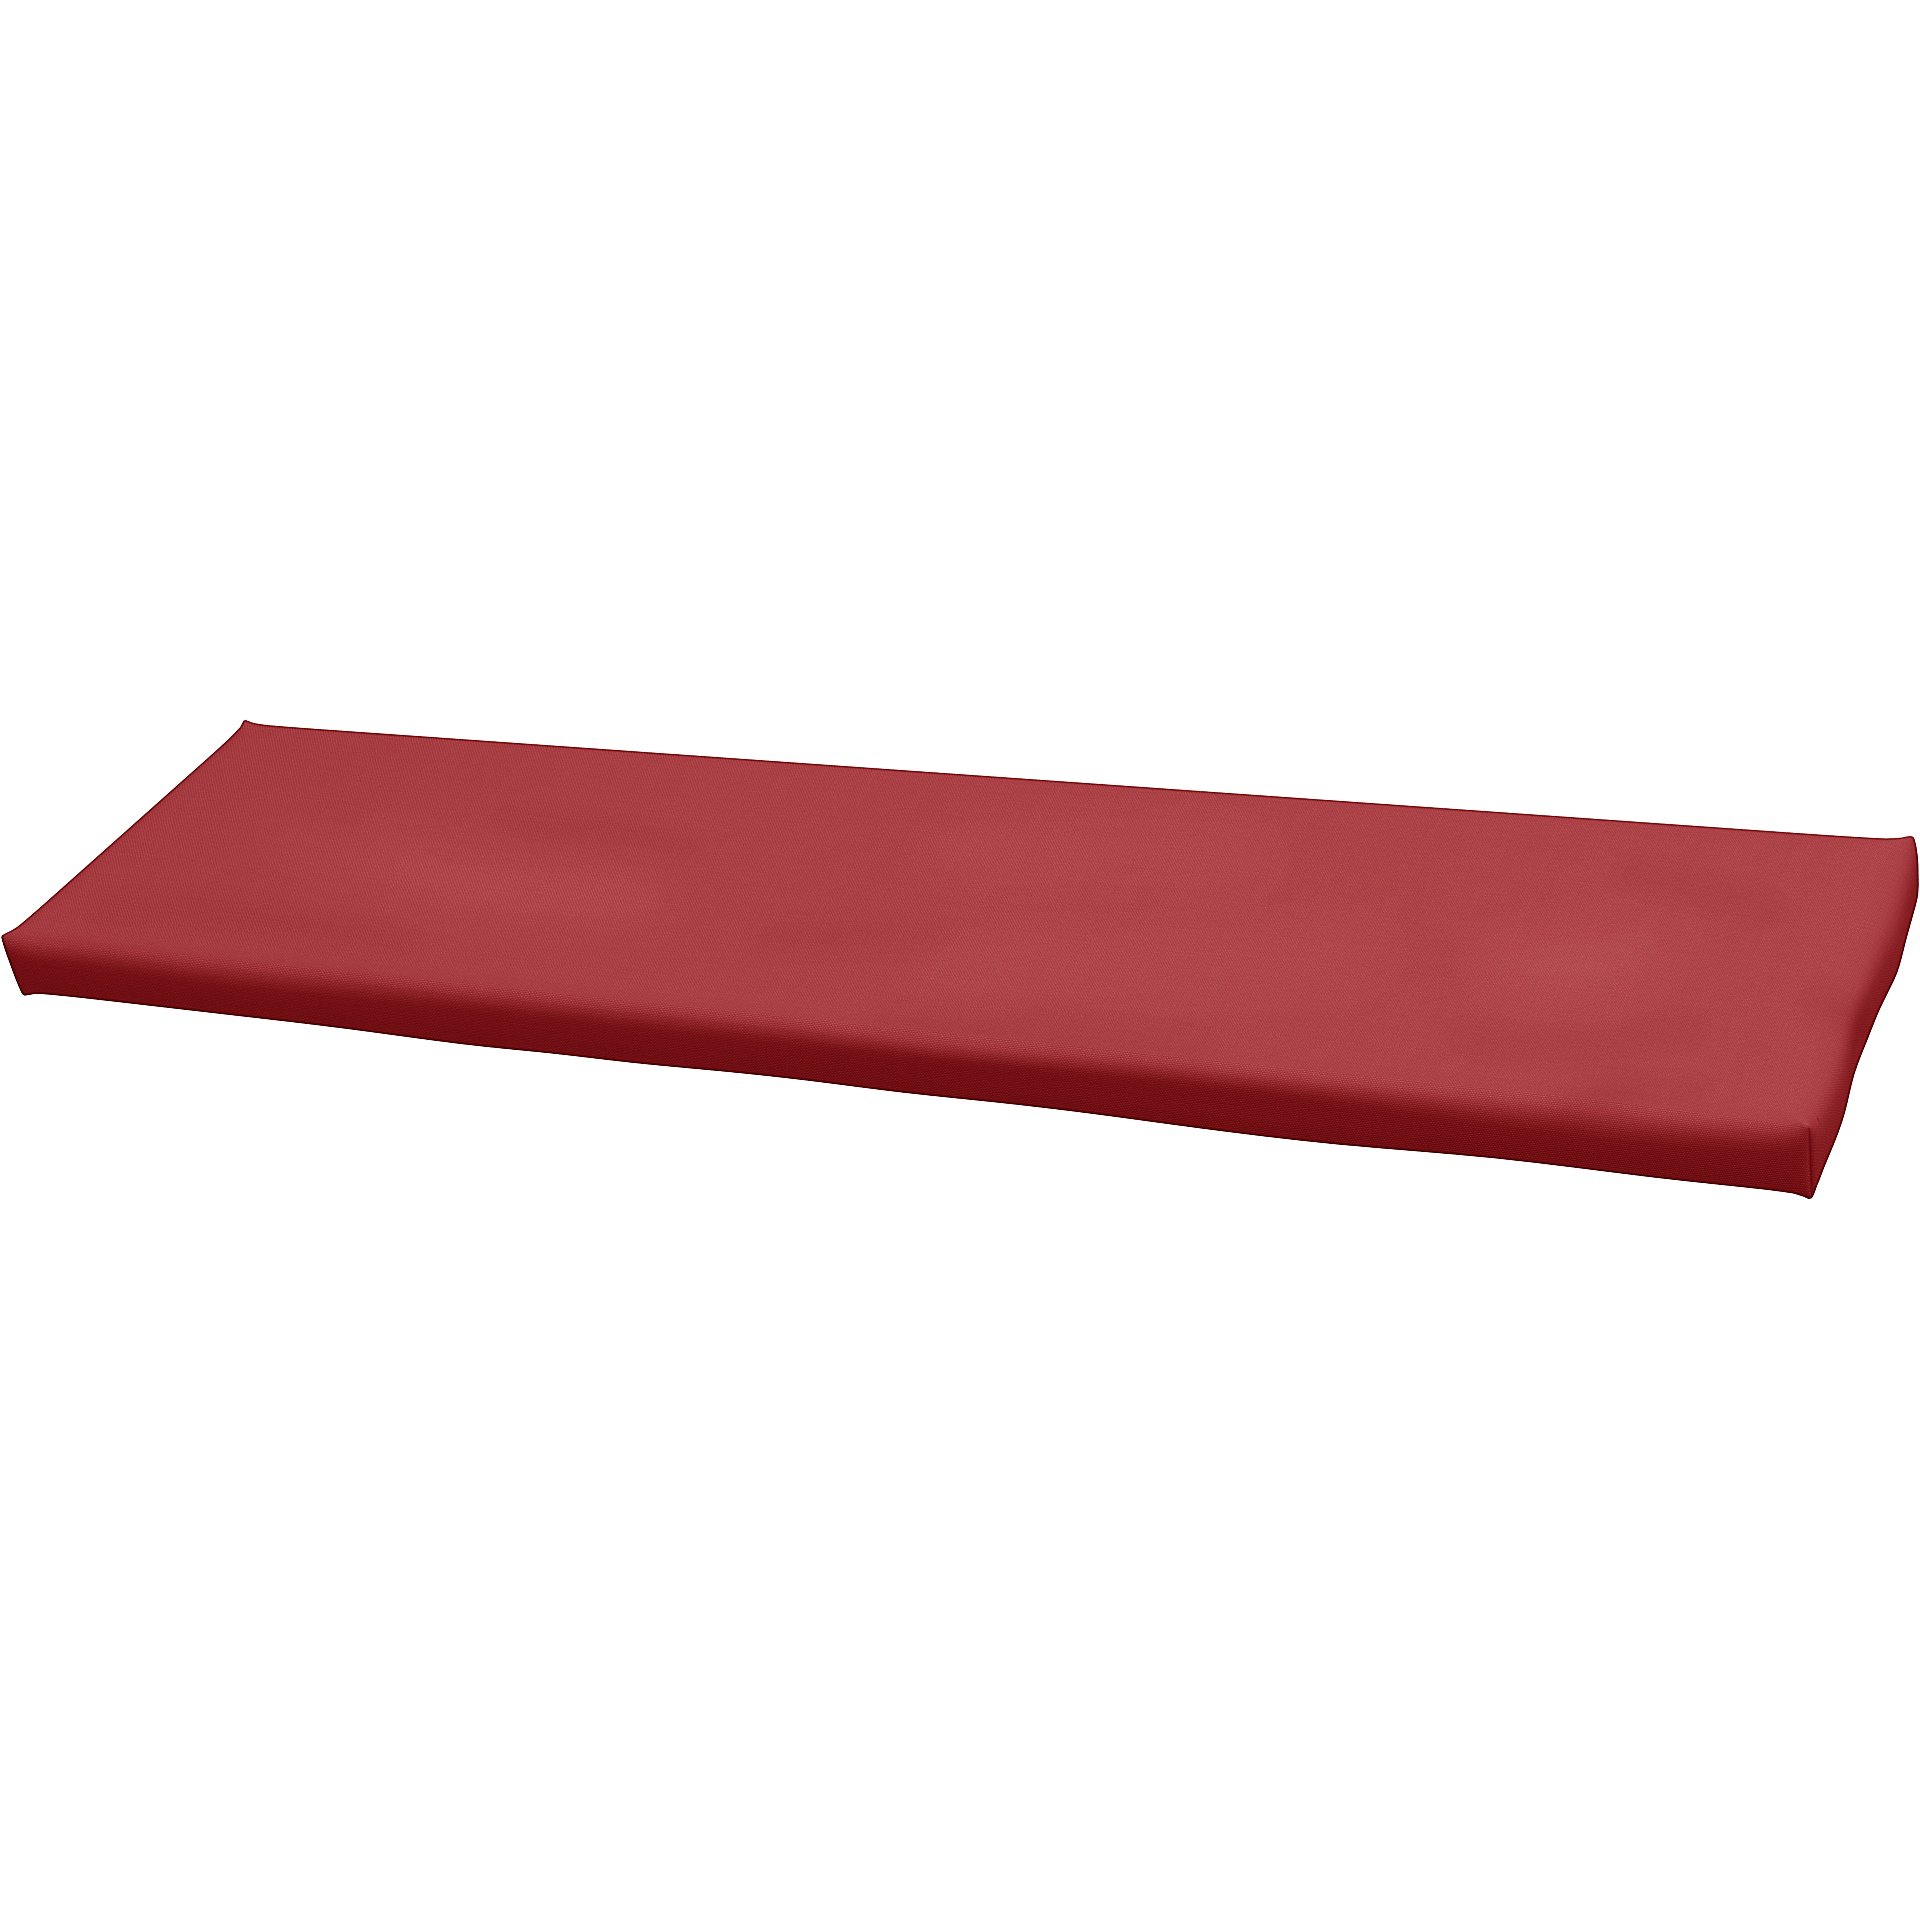 IKEA - Universal bench cushion cover 120x35x3,5 cm, Scarlet Red, Cotton - Bemz